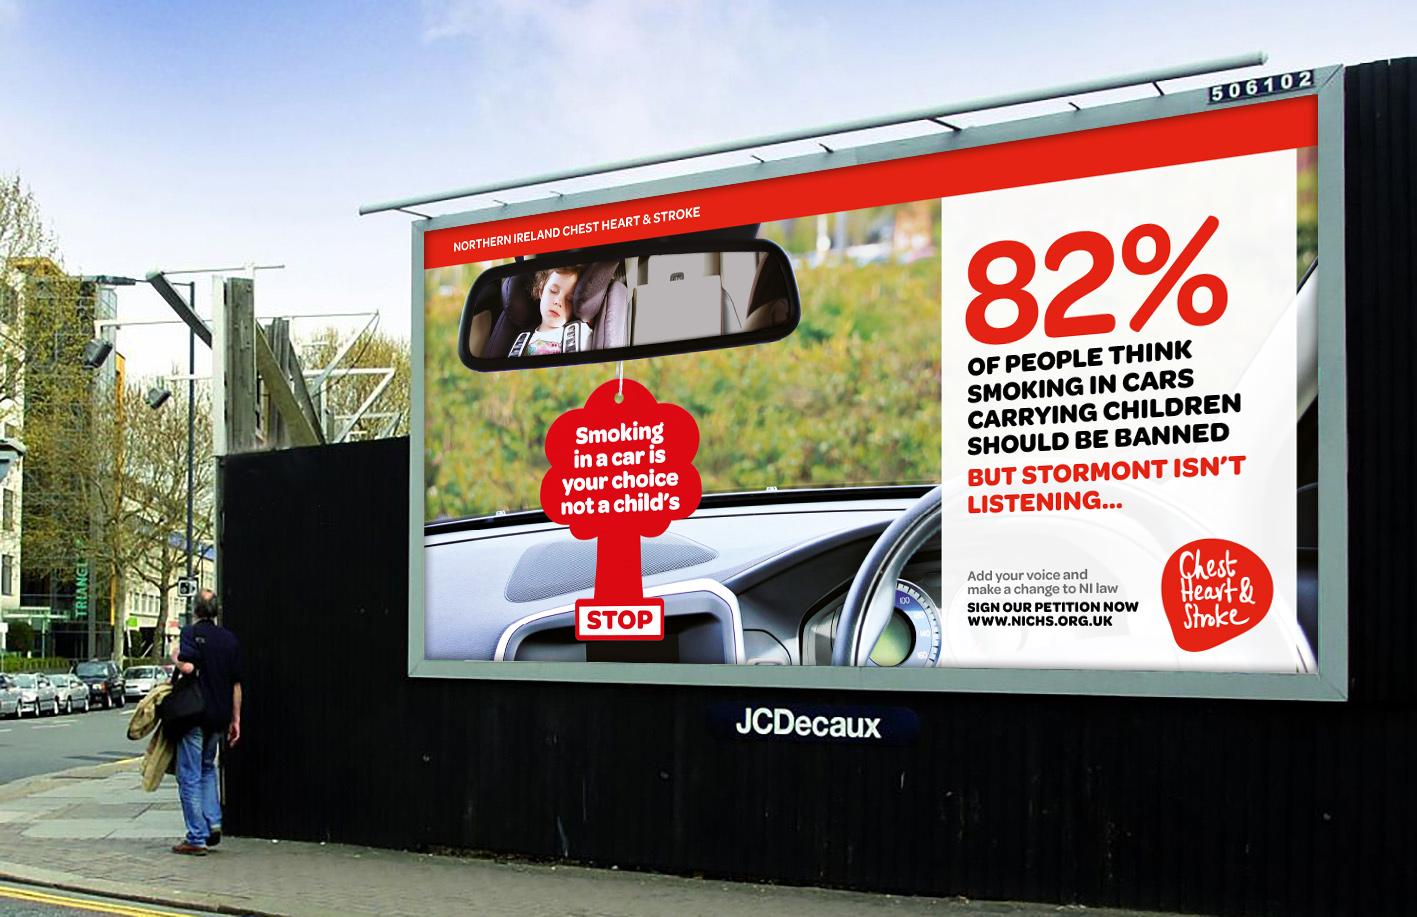 NICHS Smoking in cars campaign billboard